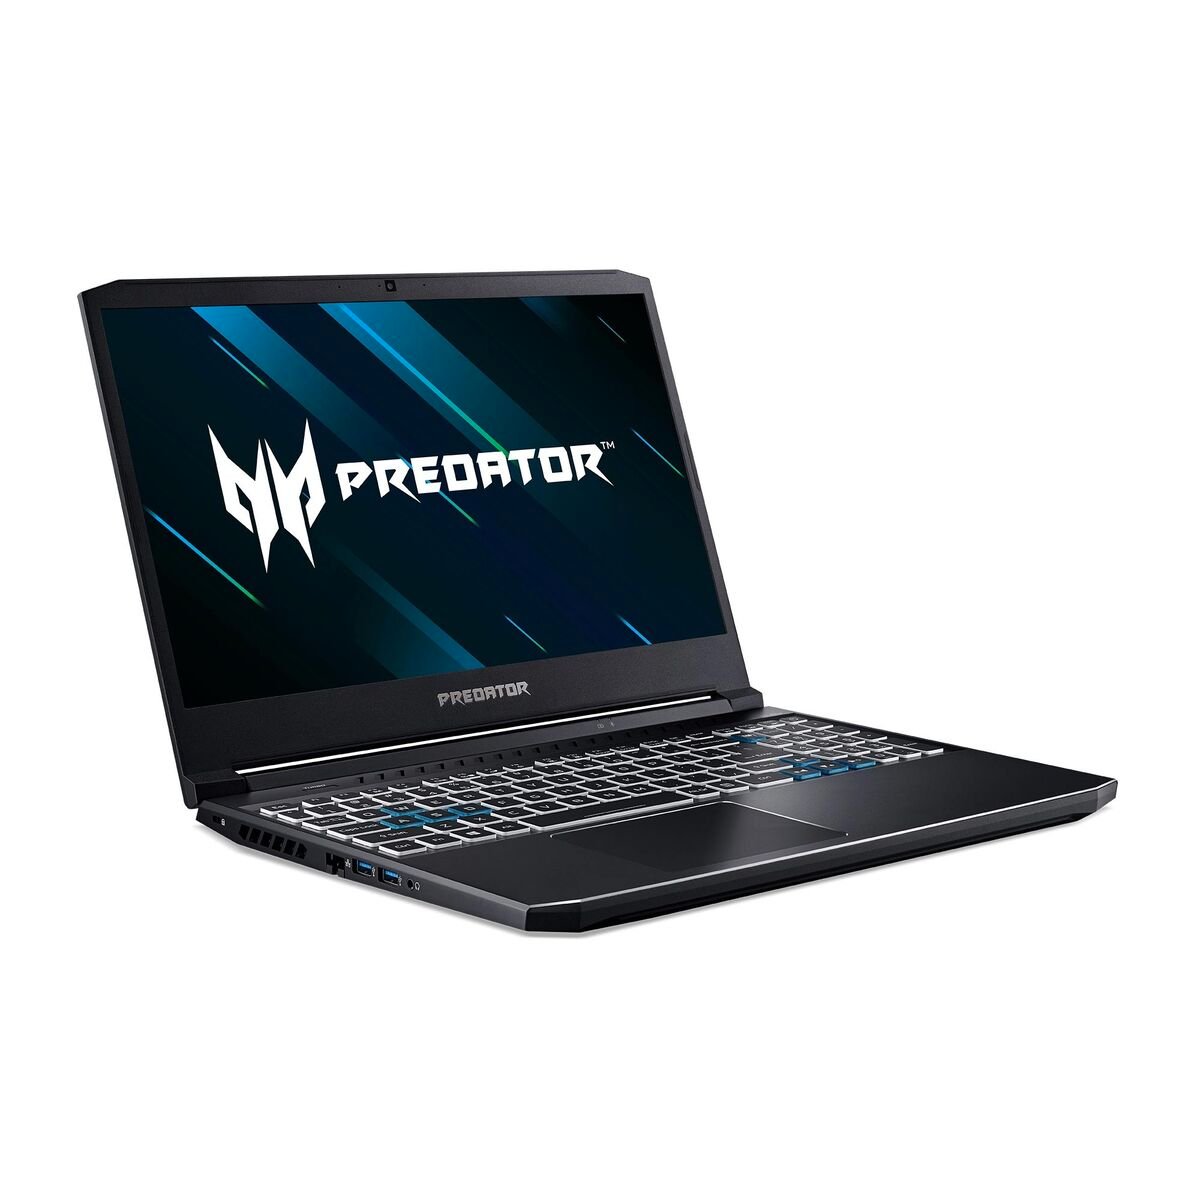 Acer Gaming Laptop Predator Helios 300 PH315-53-76DB, Intel Core i7-10750H 10th Gen, 16GB RAM, 1TB SSD, NVIDIA GeForce RTX 2060 6GB GDDR6, Windows 10, Abyssal Black